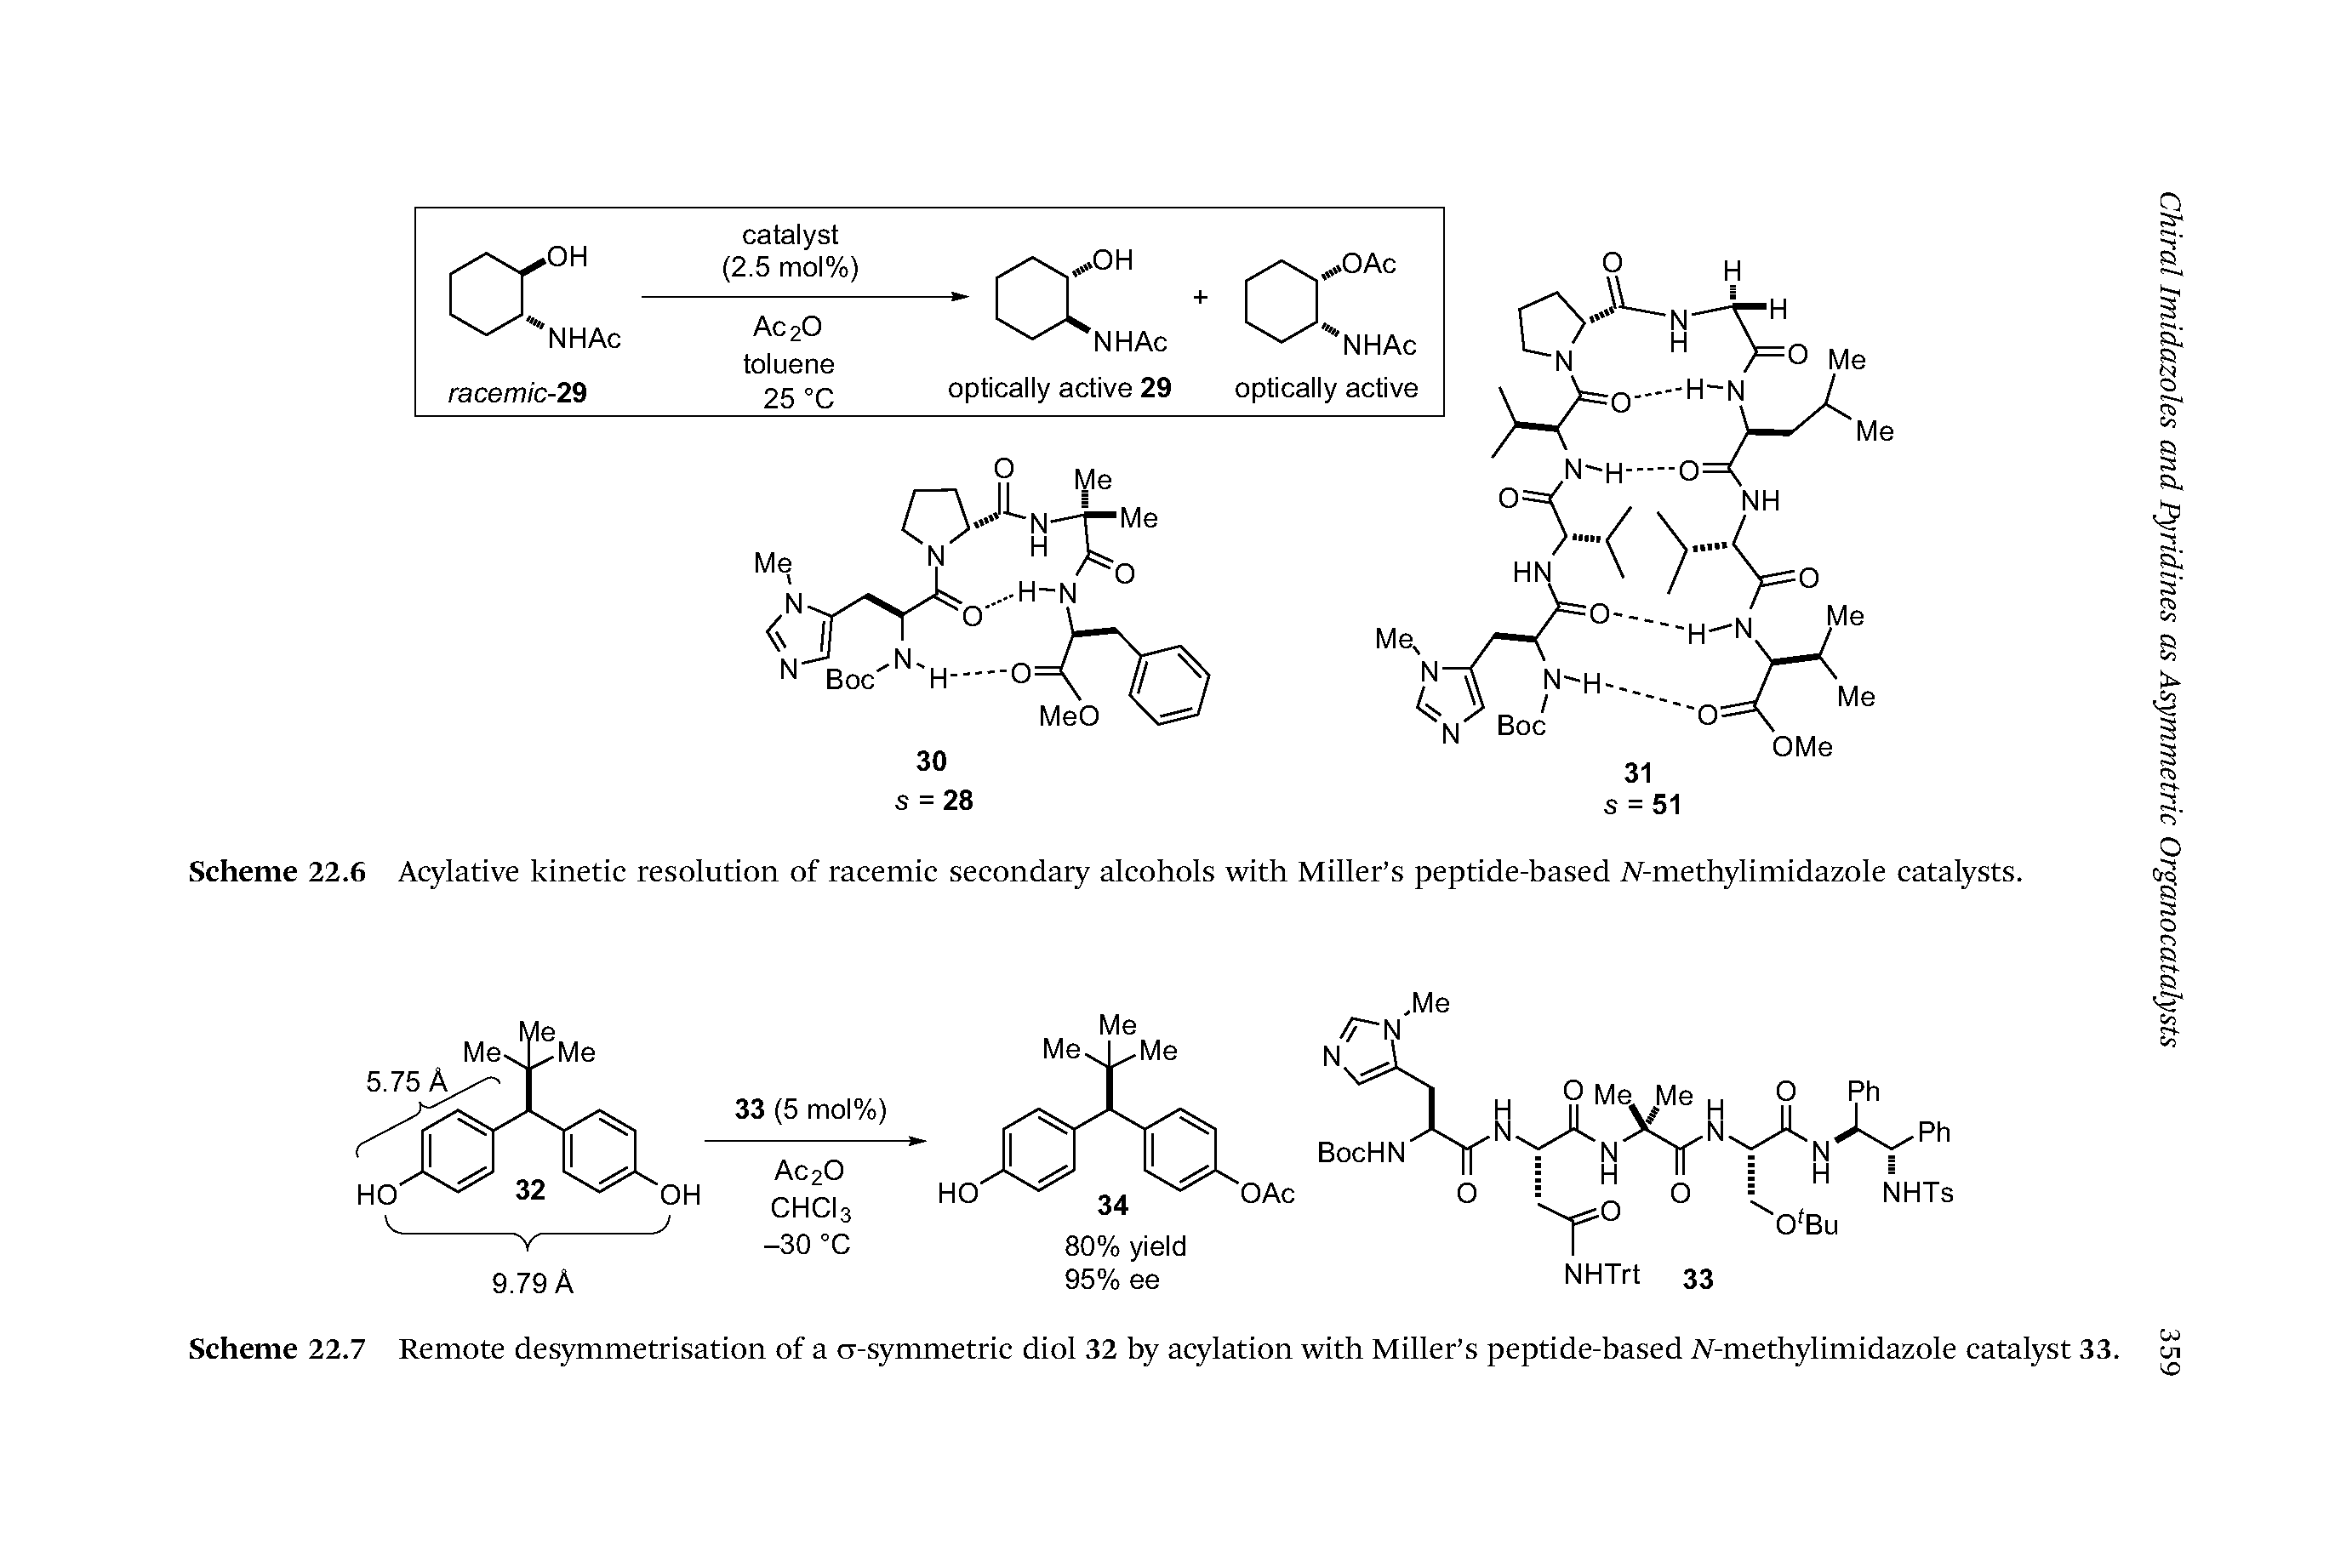 Scheme 22.7 Remote desymmetrisation of a a-symmetric diol 32 by acylation with Miller s peptide-based iV-methylimidazole catalyst 33.